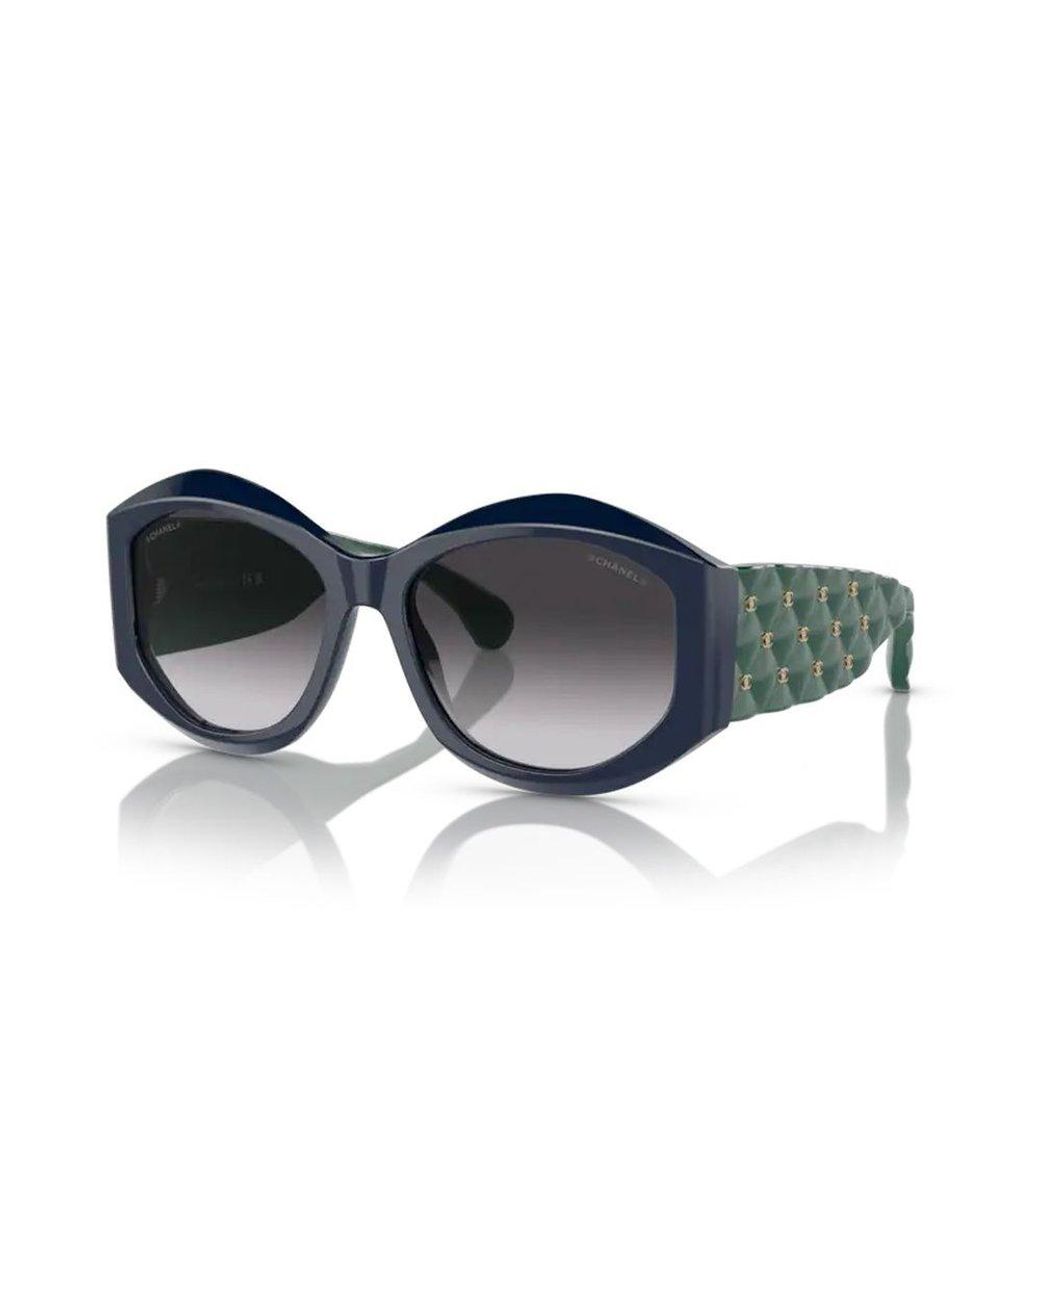 Chanel Women's Oval Frame Sunglasses - Blue